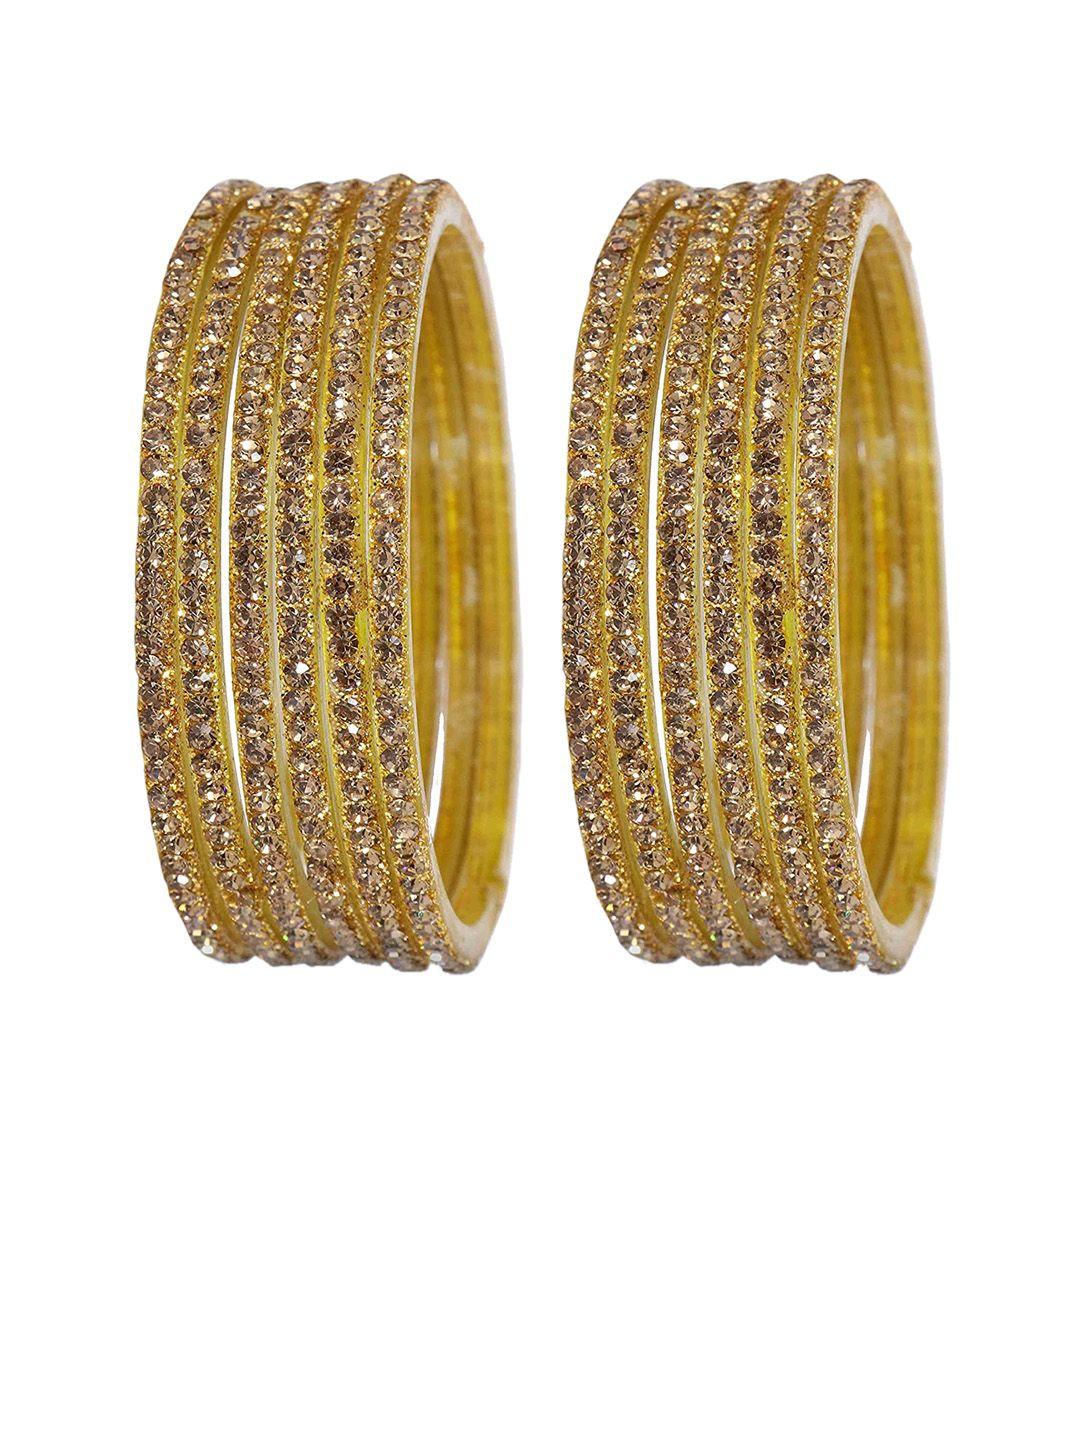 nmii set of 12 glass & zircon gemstone studded glossy finished bangles